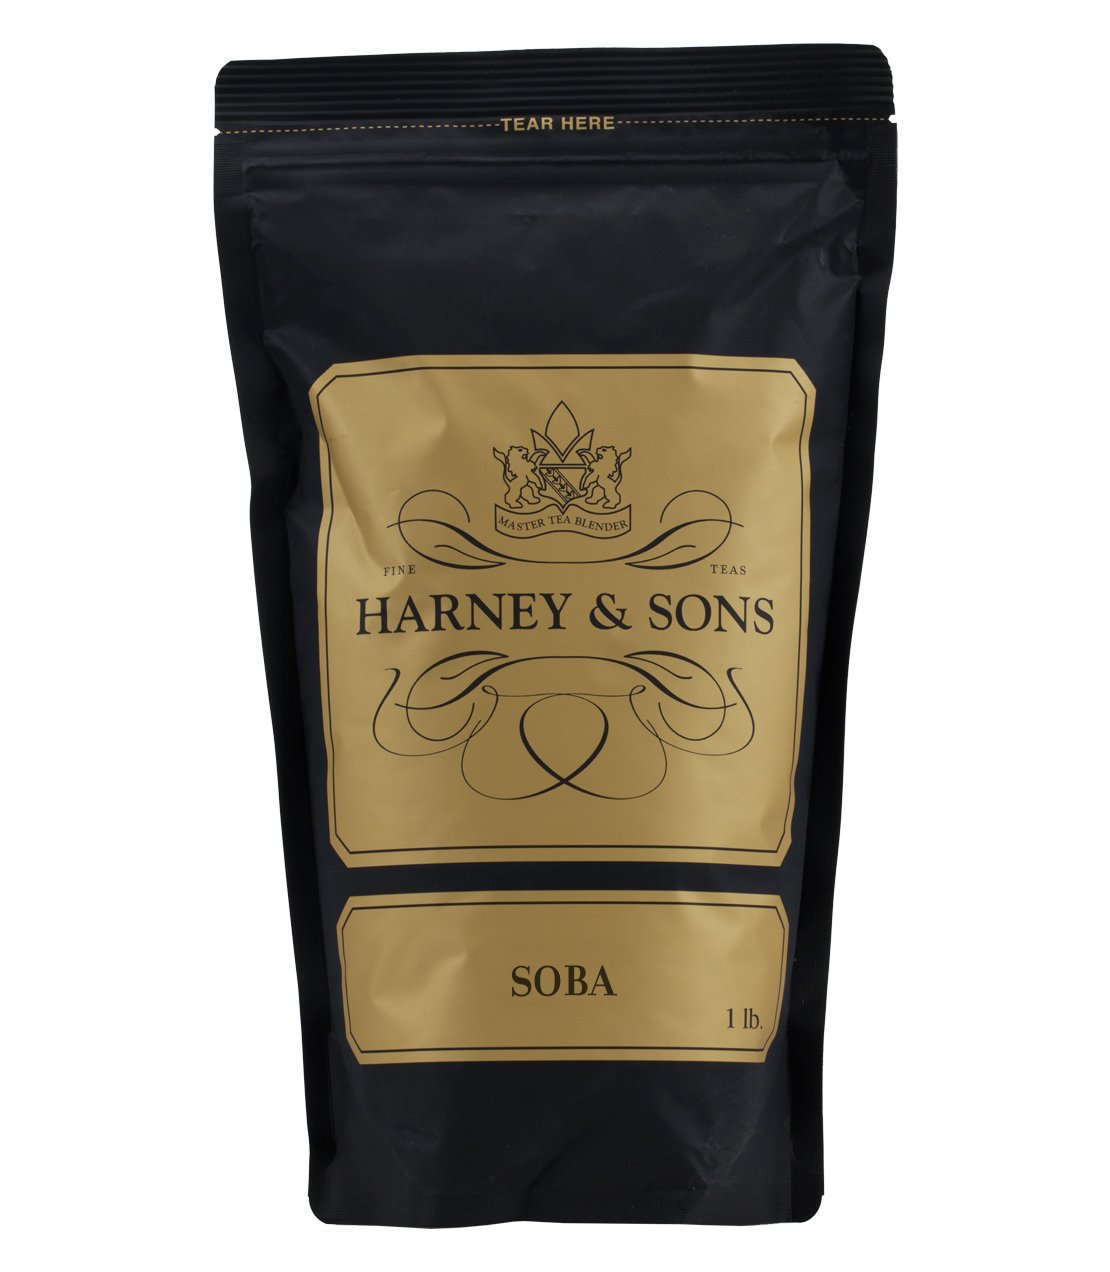 Soba Roasted Buckwheat Tea - Loose 1 lb. Bag - Harney & Sons Fine Teas